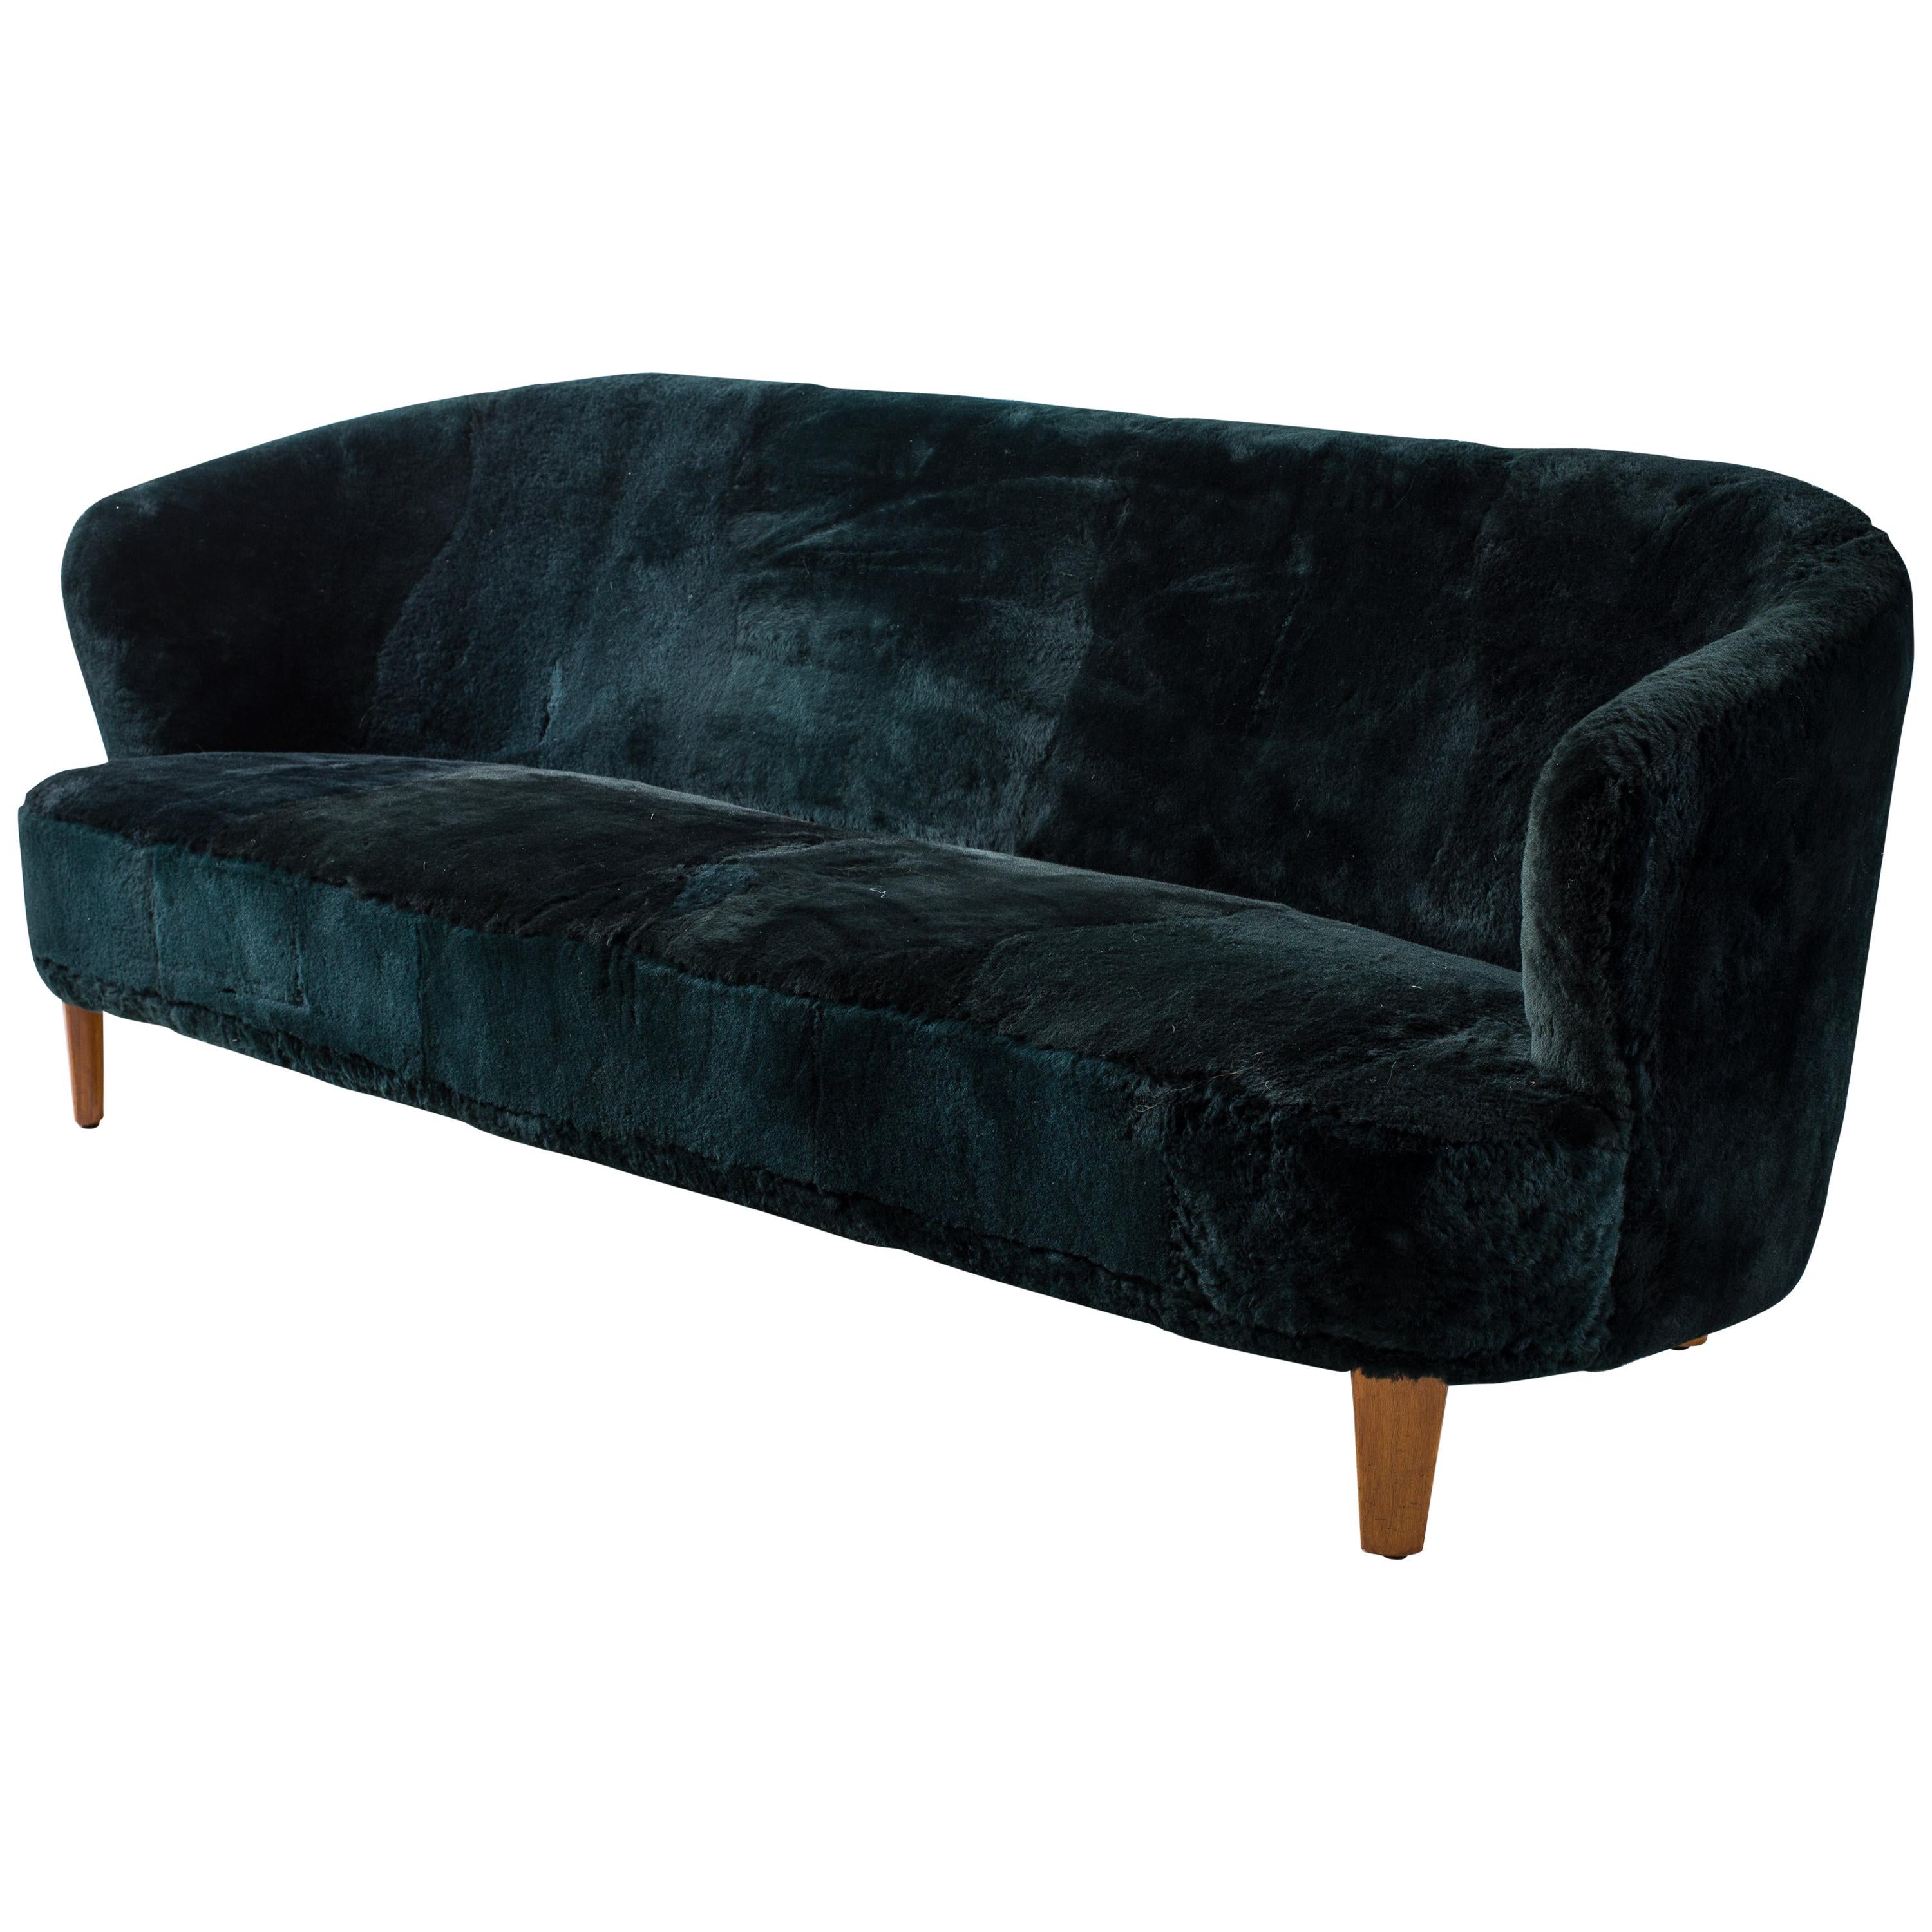 NYA "Berlin" Sofa by Carl Malmsten, Shearling Upholstery